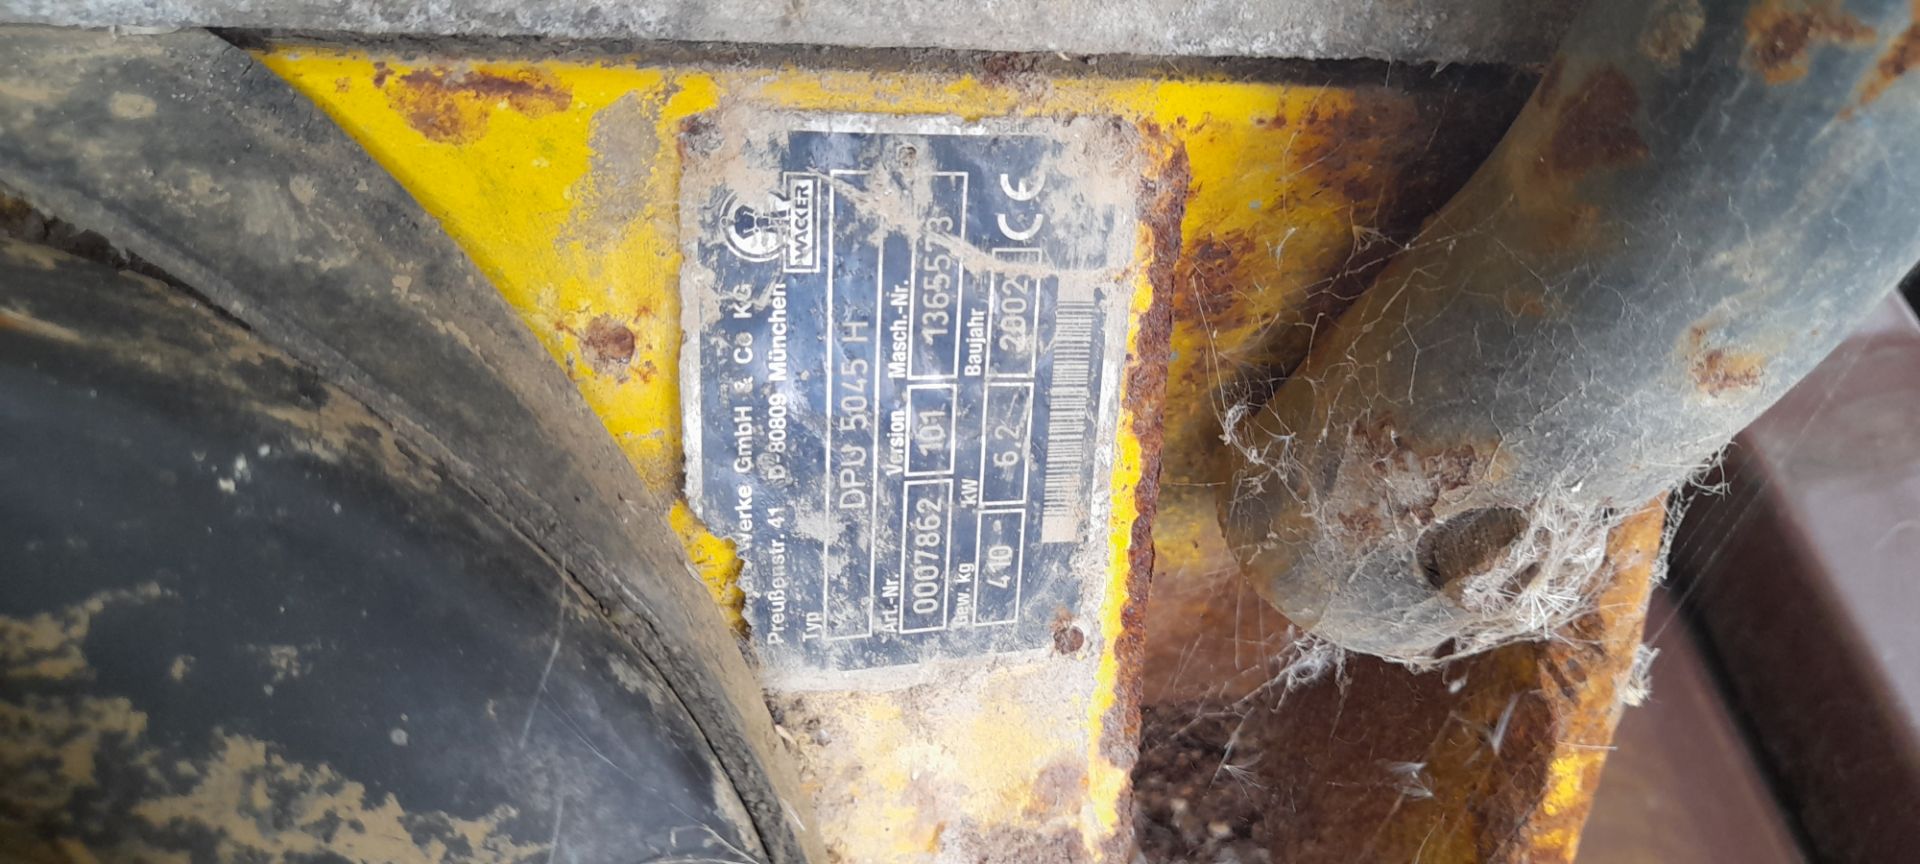 Wacker DPU5045H Vibrating Plate 2002 – Spares or Repair - Image 2 of 2